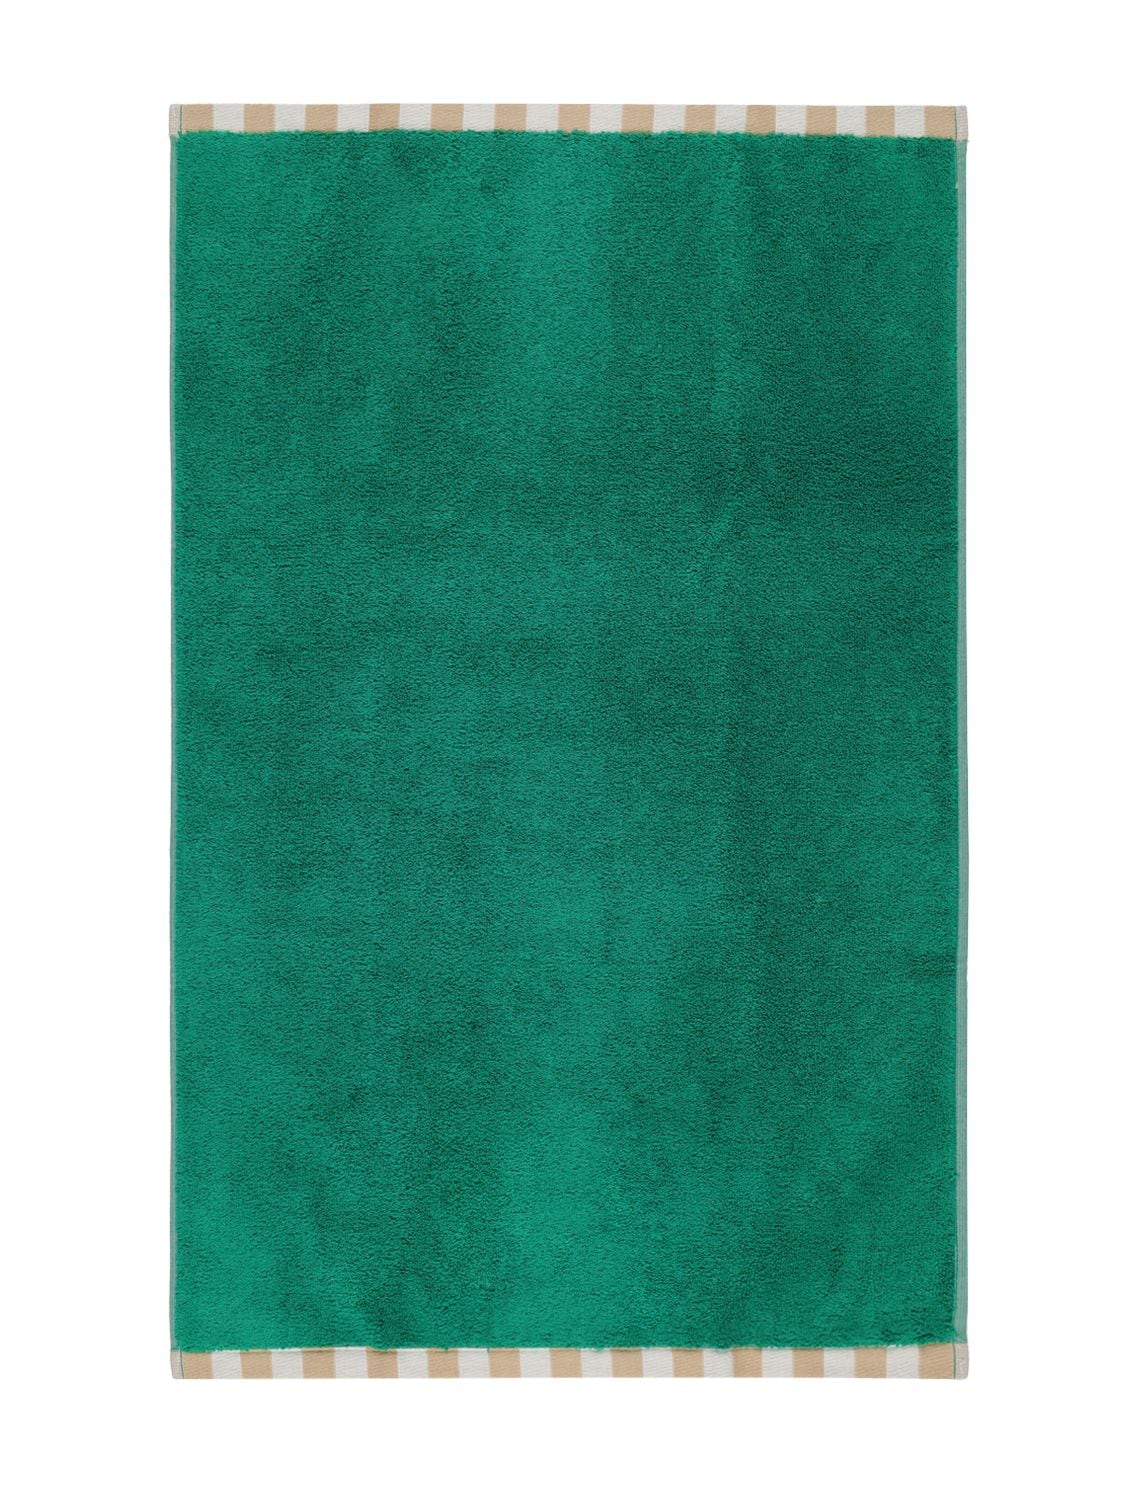 Dusen Dusen Two Tone Cotton Terry Hand Towel In Green,orange